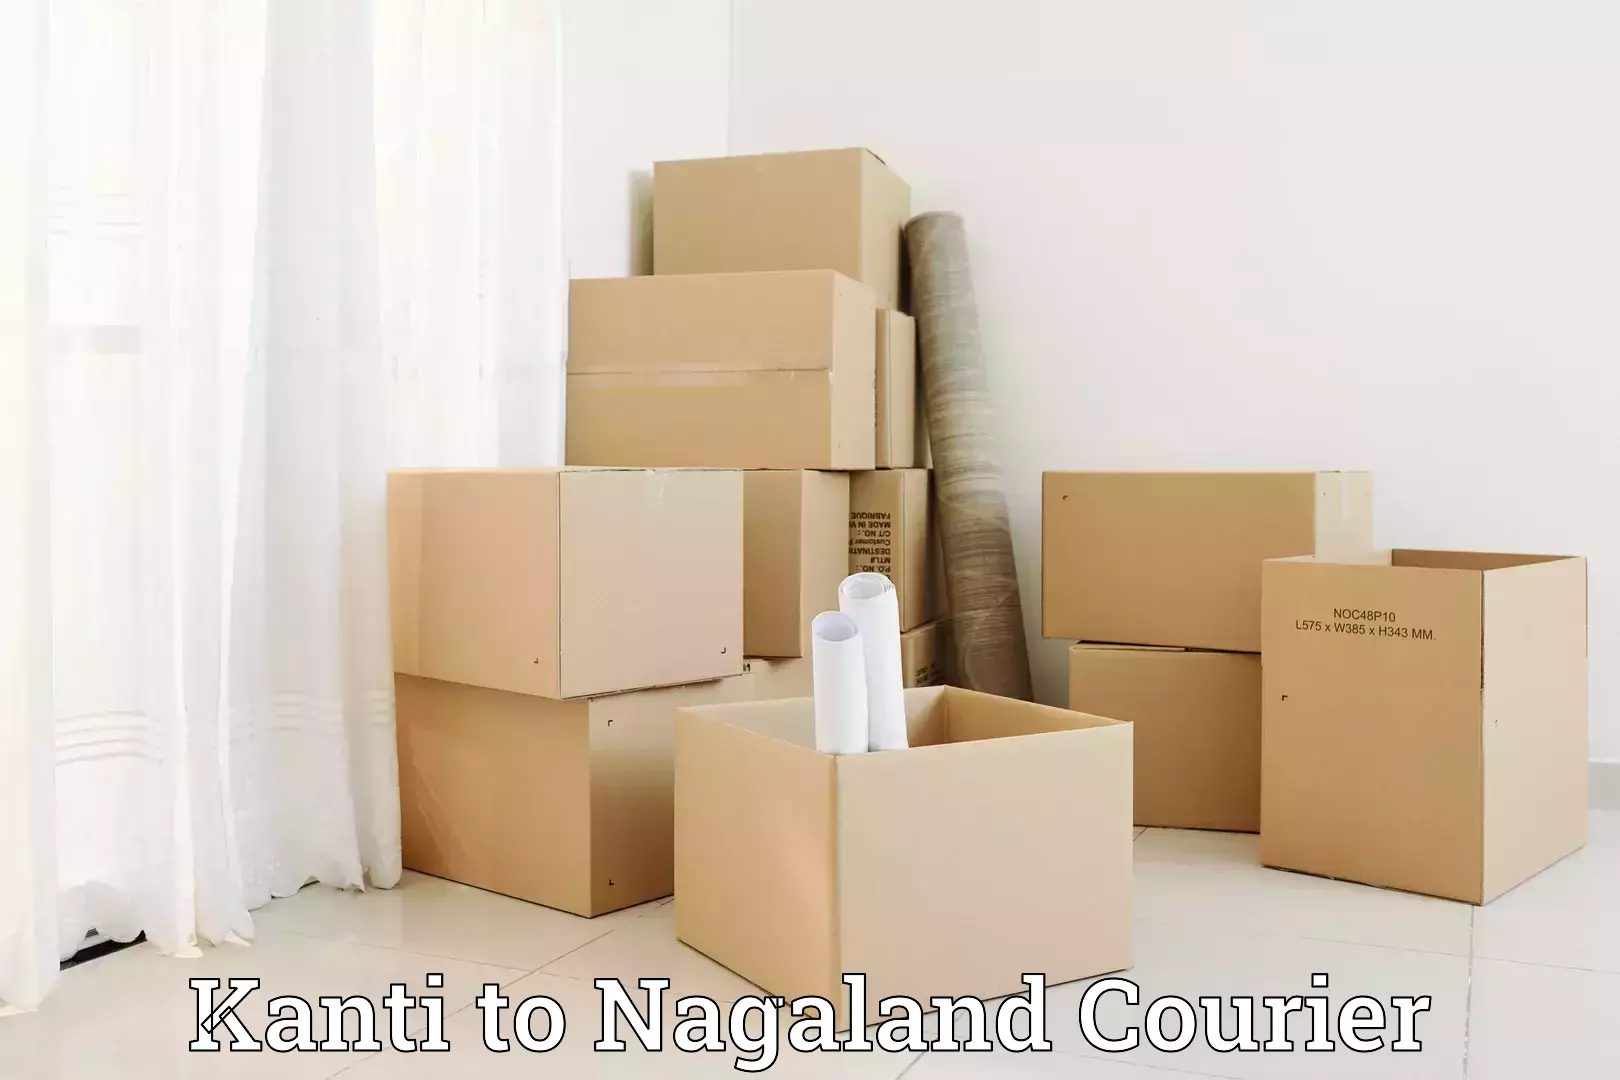 Luggage shipment specialists Kanti to Nagaland